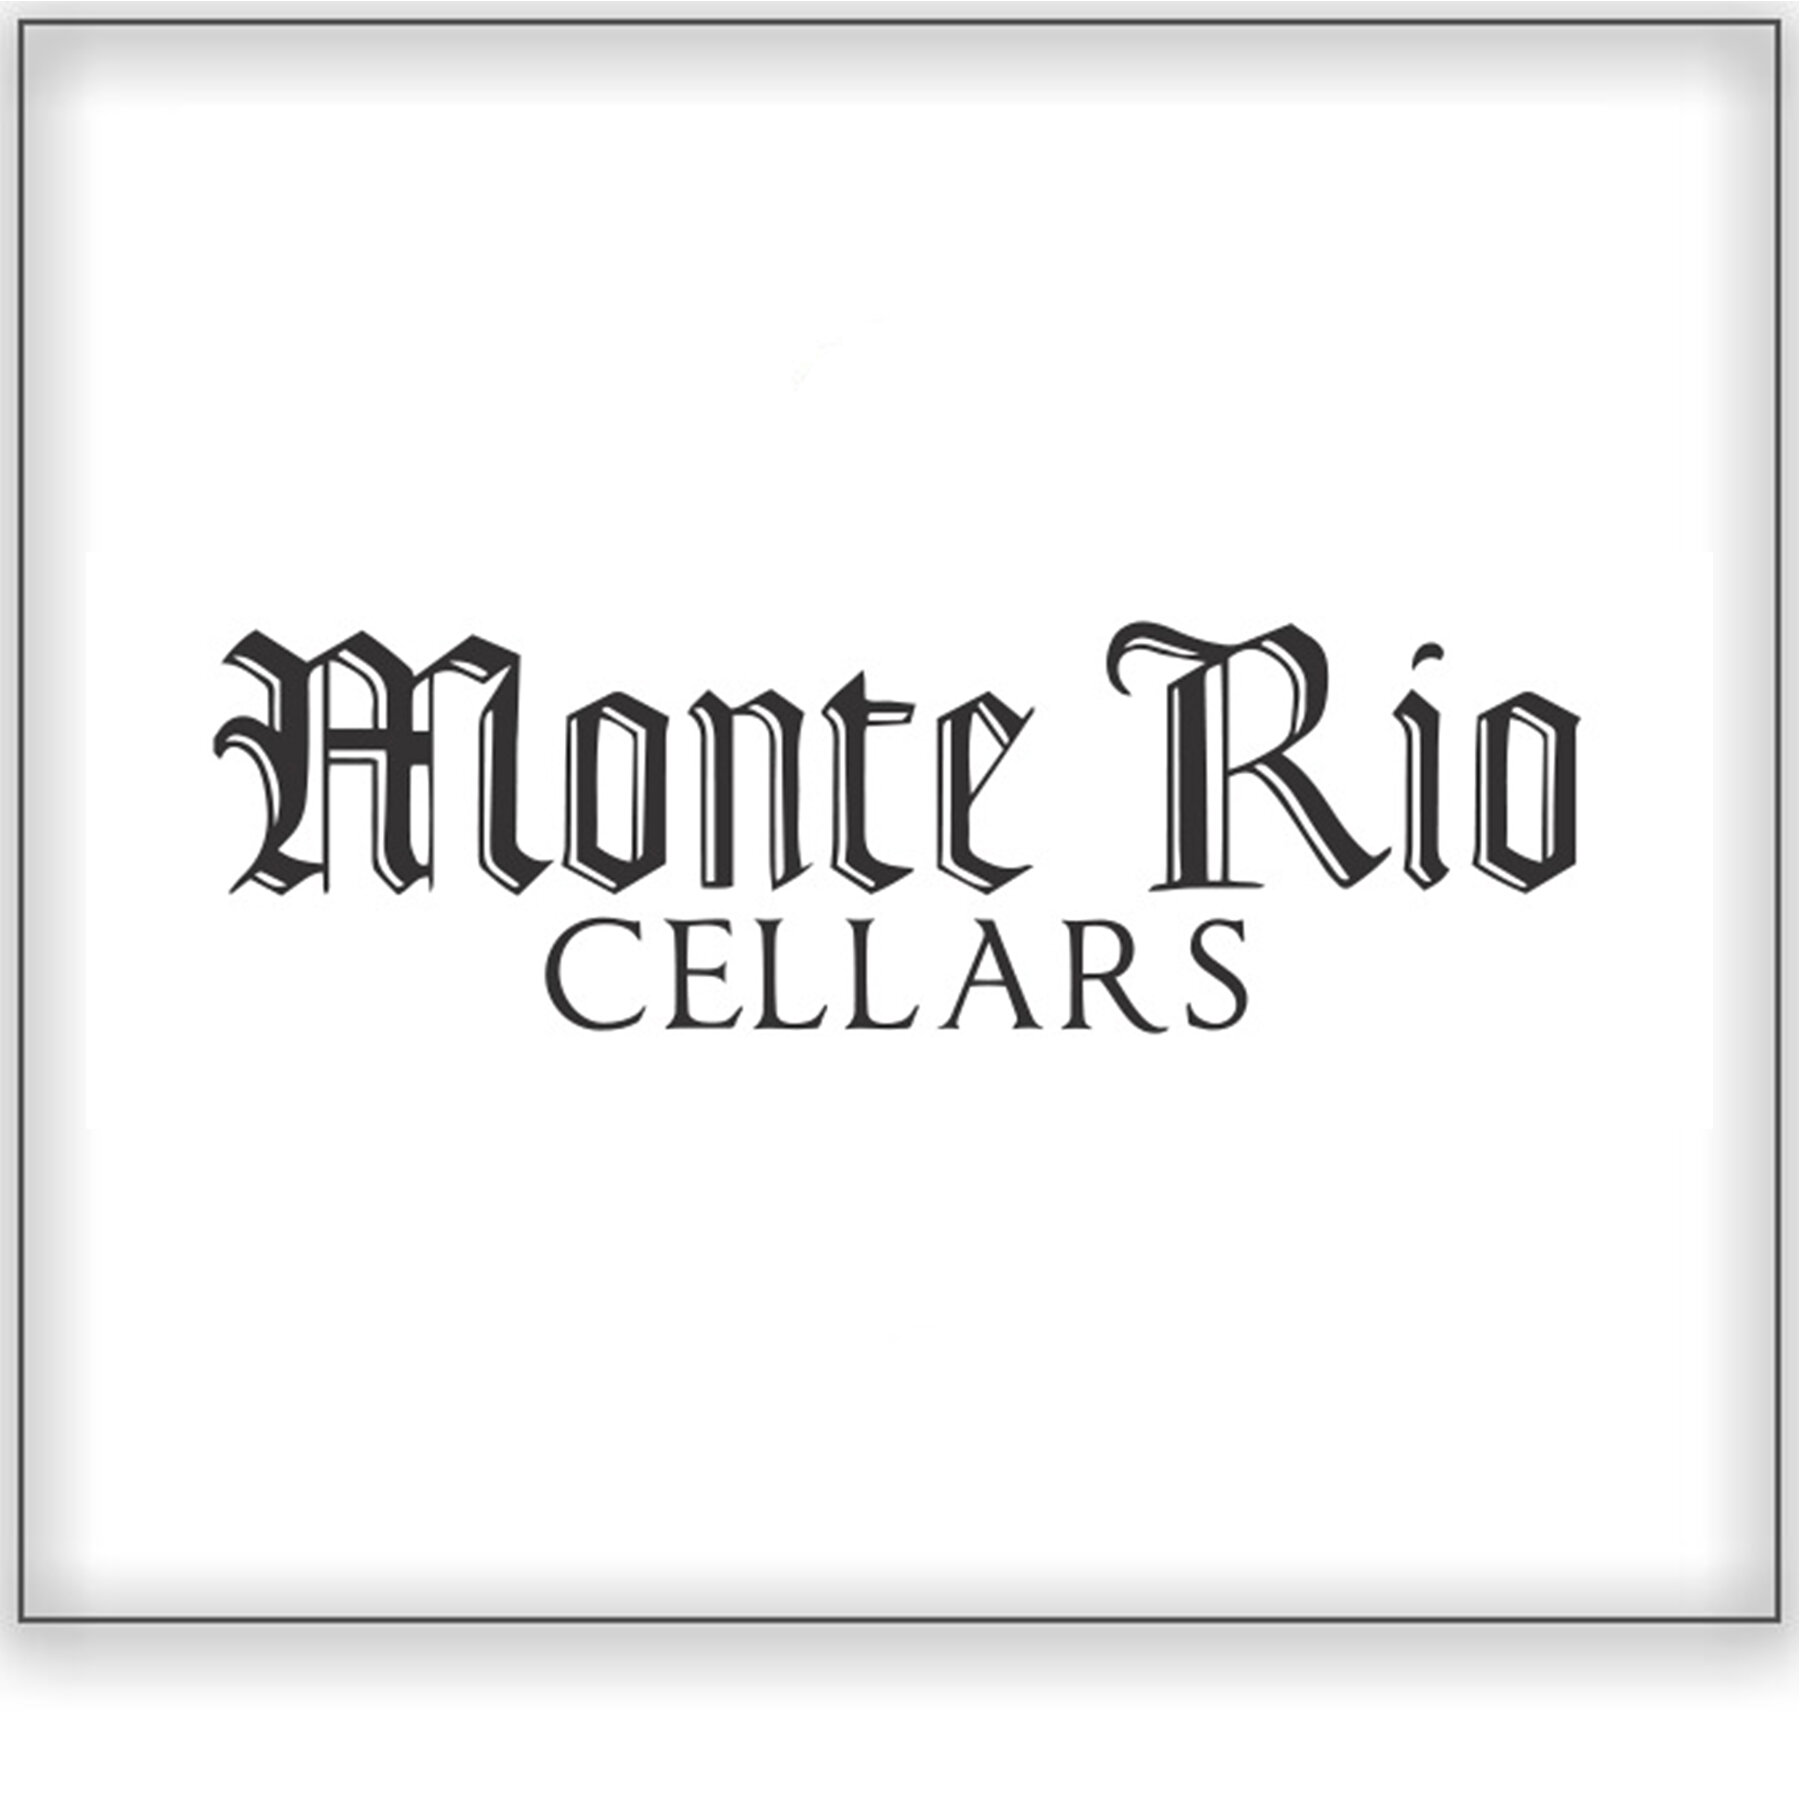 Monte Rio Cellars&lt;a href=/monte-rio-cellars&gt;Sebastopol, California ➤&lt;/a&gt;